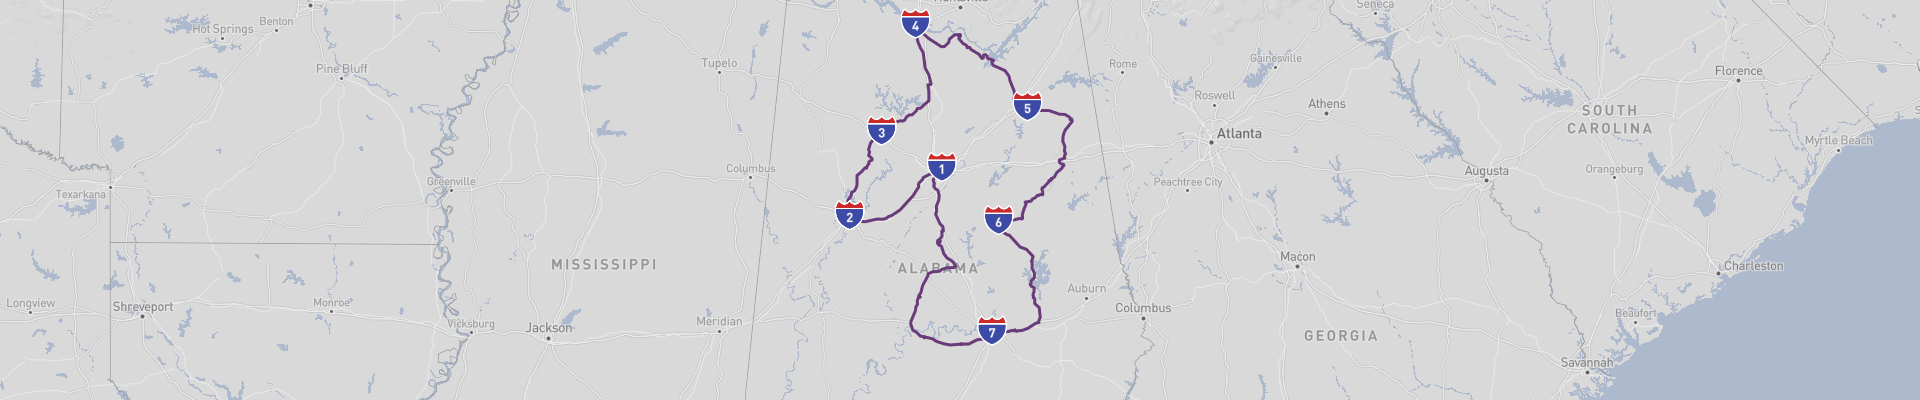 Alabama Roadtrip